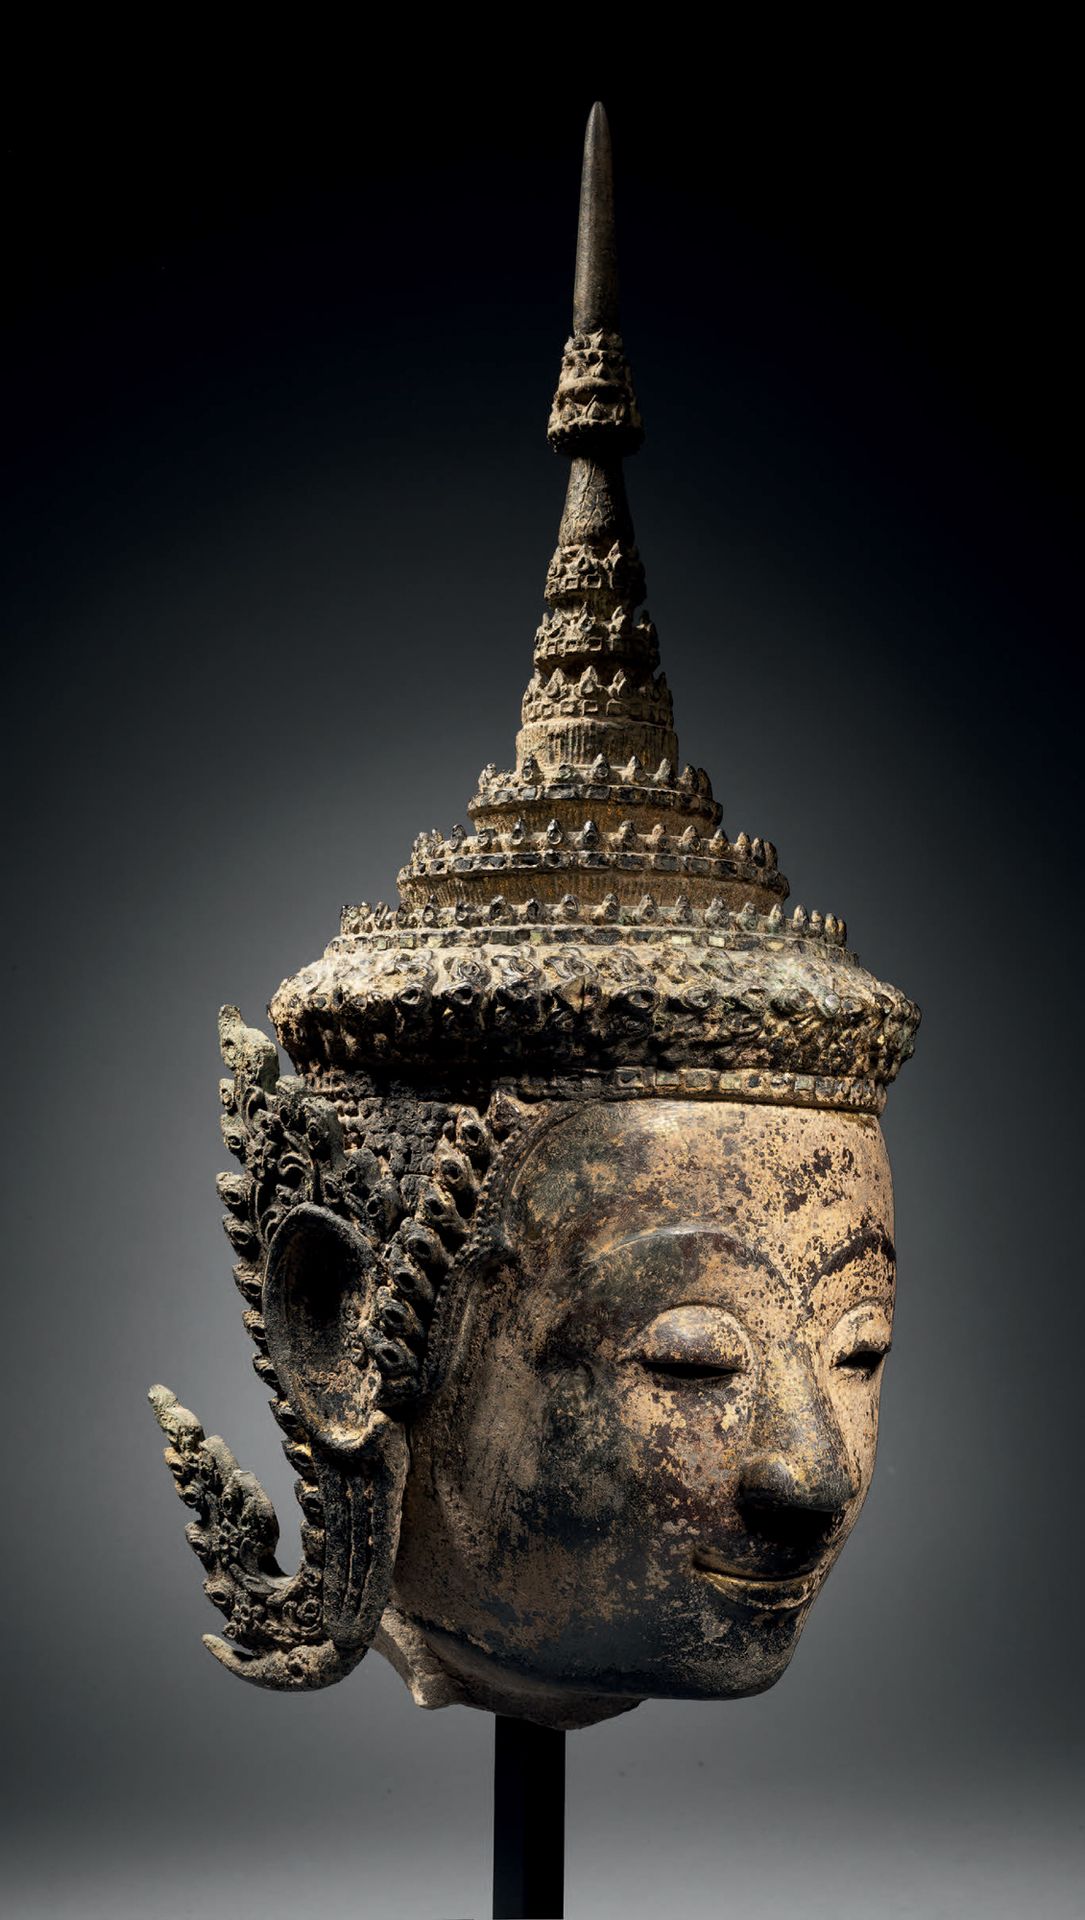 Null 佛教侍者头像，泰国大城府风格，18世纪，高41厘米。多色砂岩和铜合金
神灵的脸是微笑的，半闭着杏仁形的眼睛，合拢的嘴唇升到嘴角，眉毛上扬。头饰让人联想&hellip;